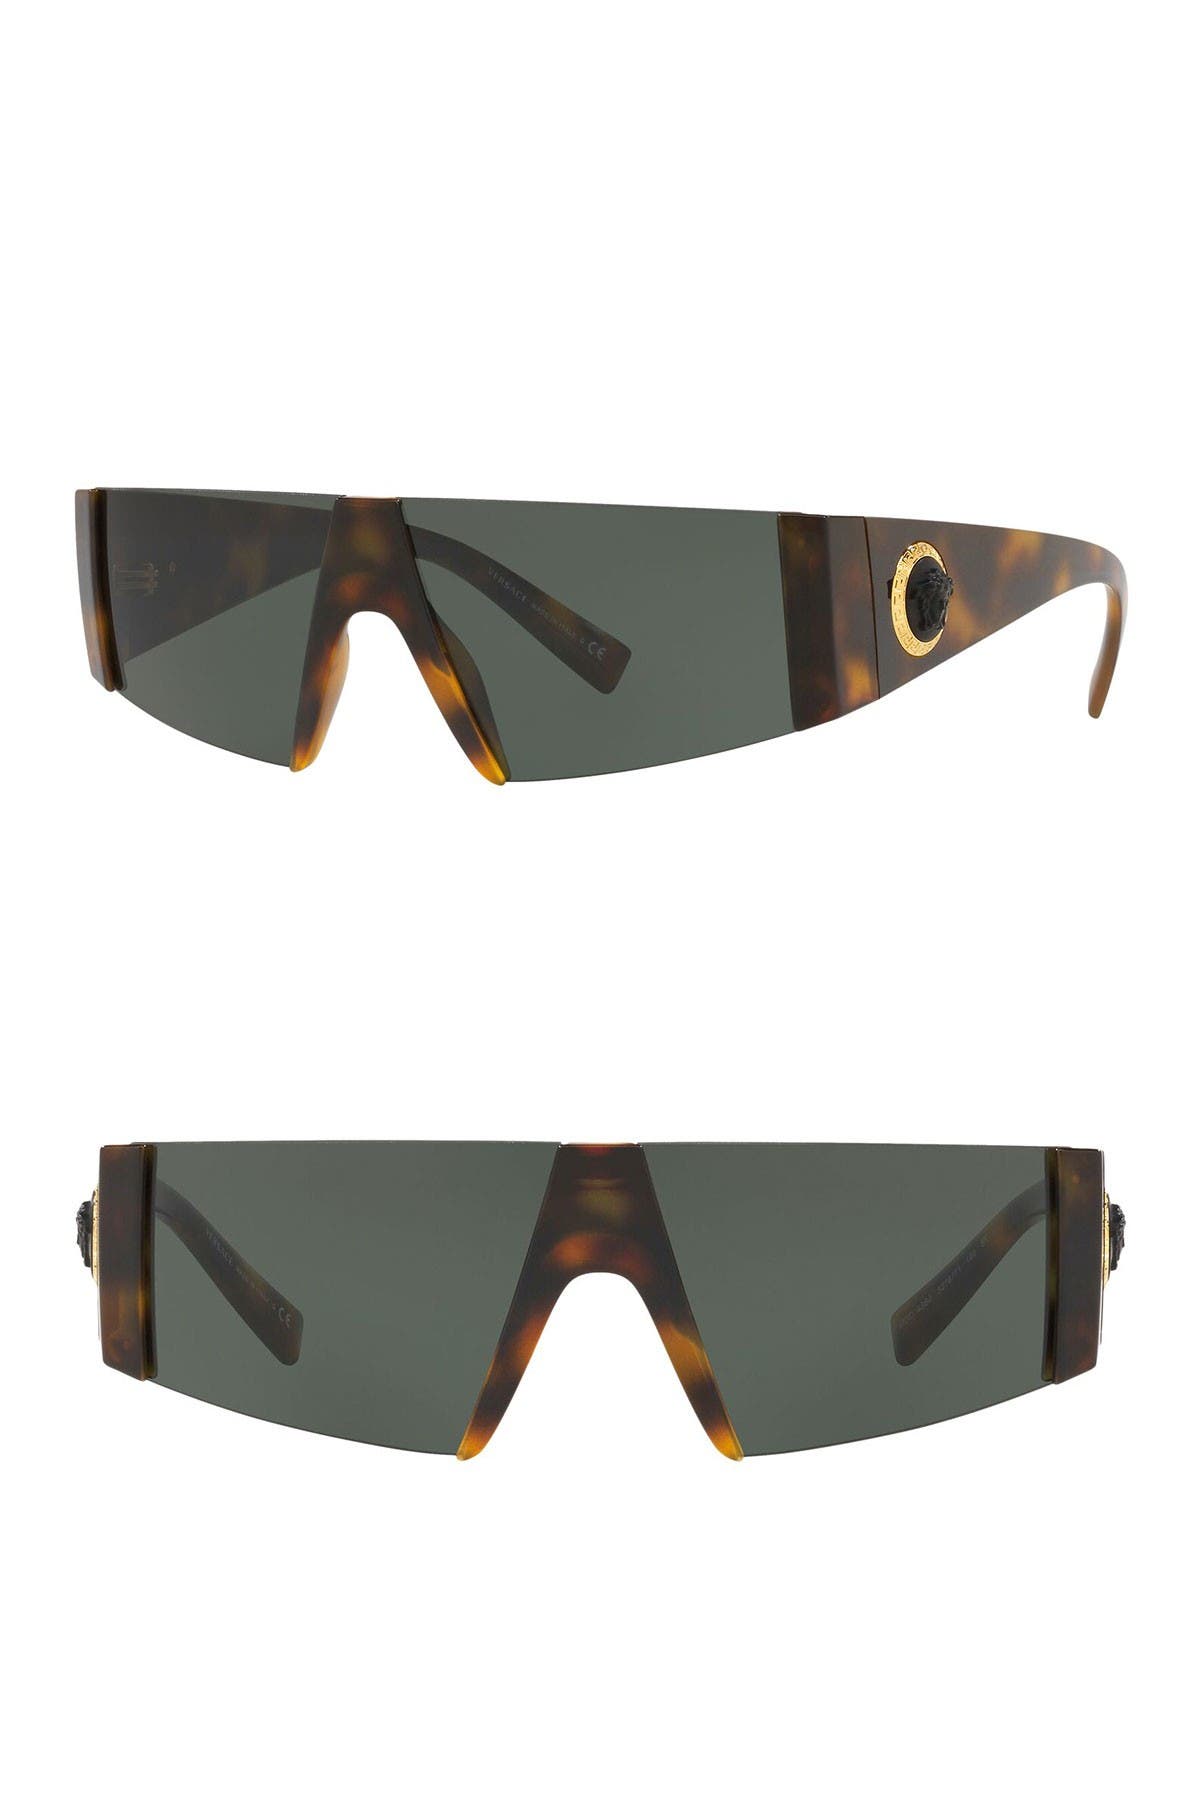 nordstrom versace sunglasses